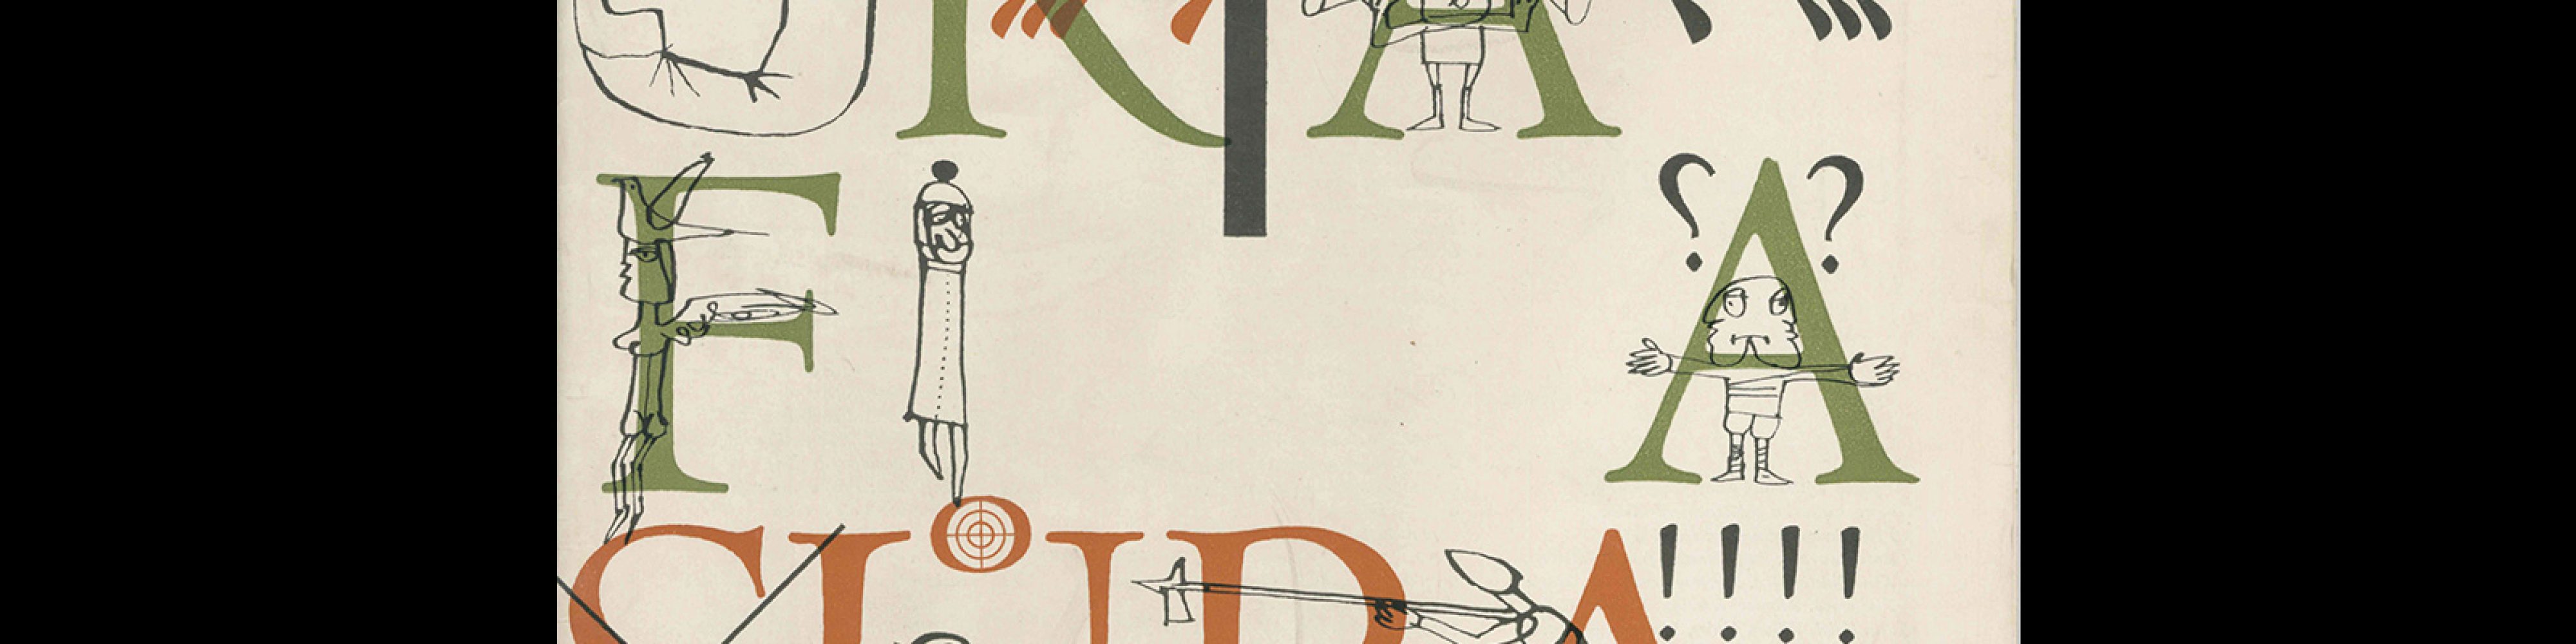 Typografia, ročník 72, 2, 1969. Cover design by Jiří Rathouský and Vladimir Tesar